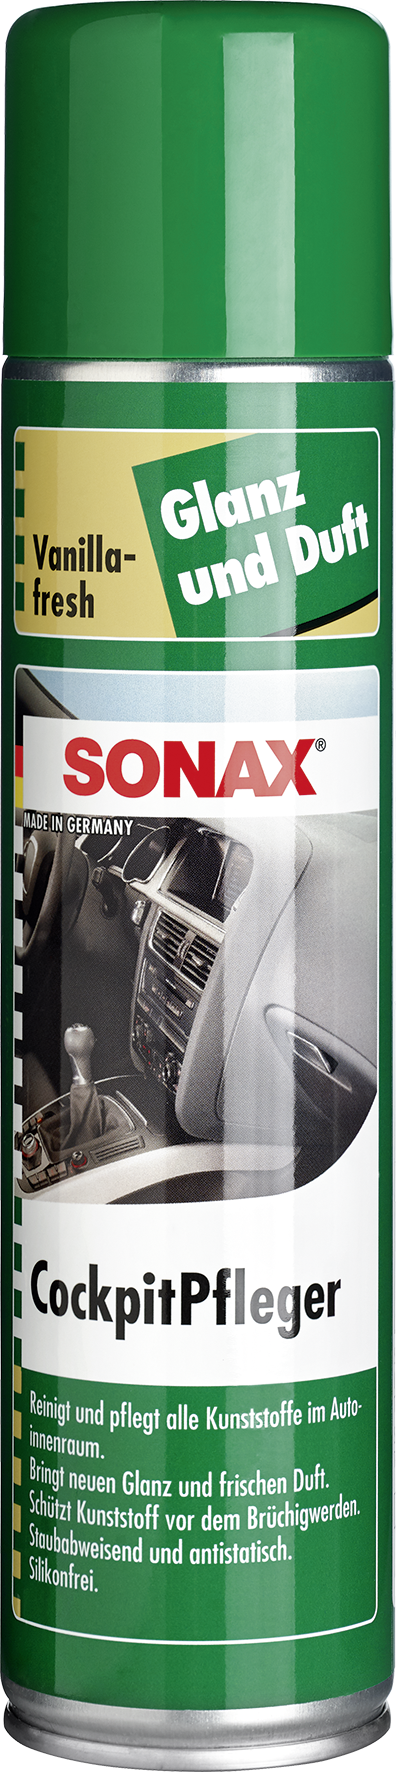 SONAX Cockpit Pfleger Vanilla-fresh 8x 400 Milliliter